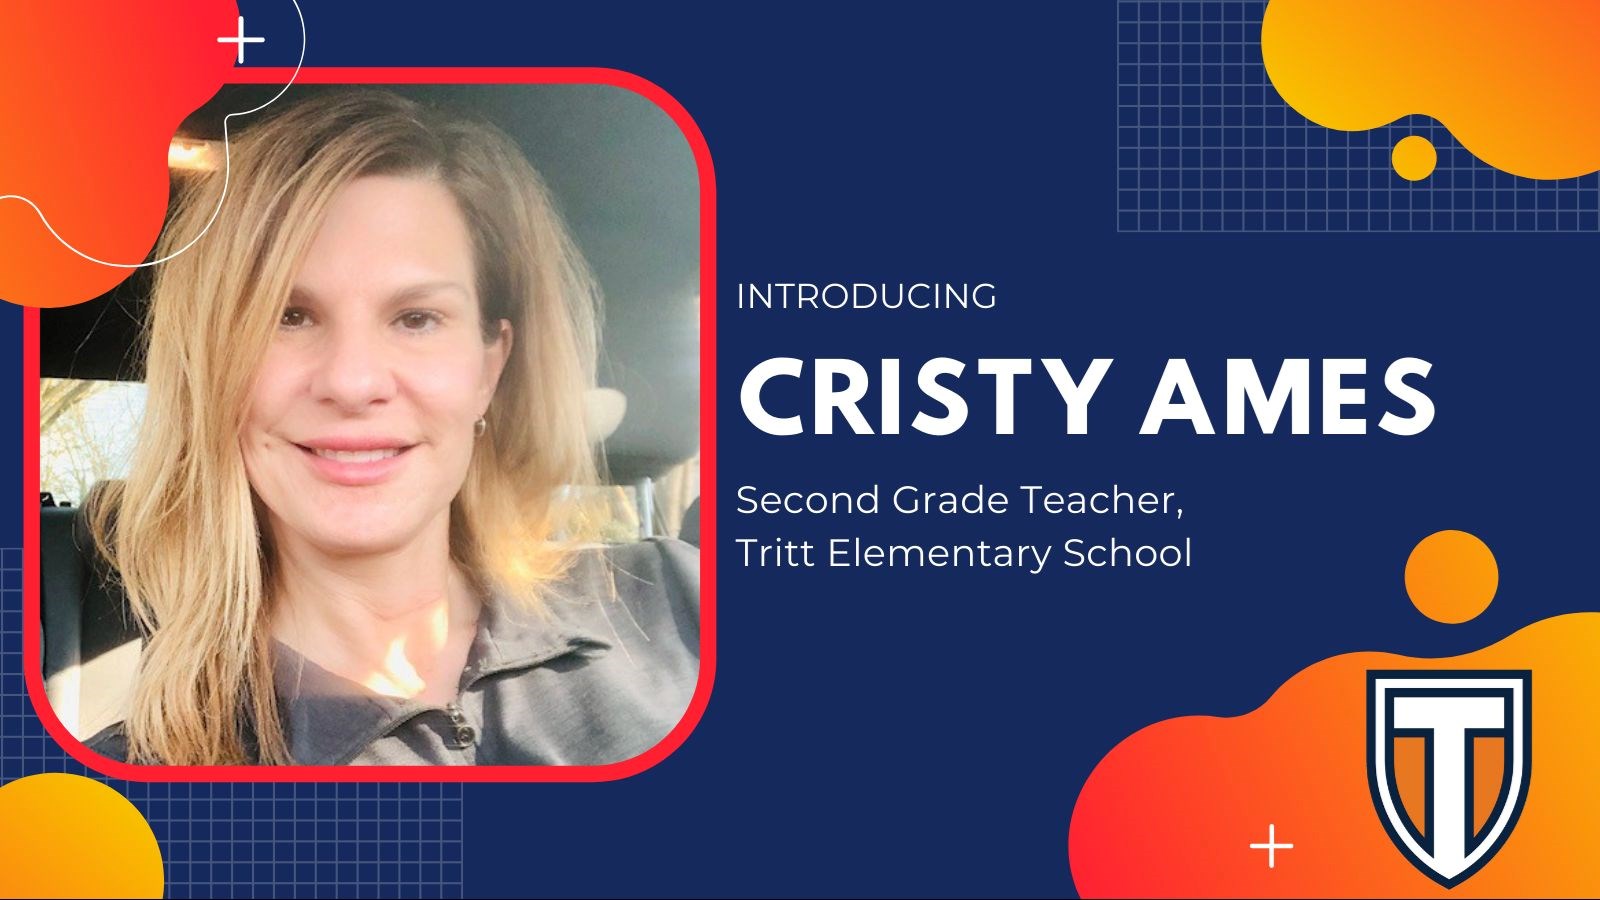 Introducing Cristy Ames Second Grade Teacher